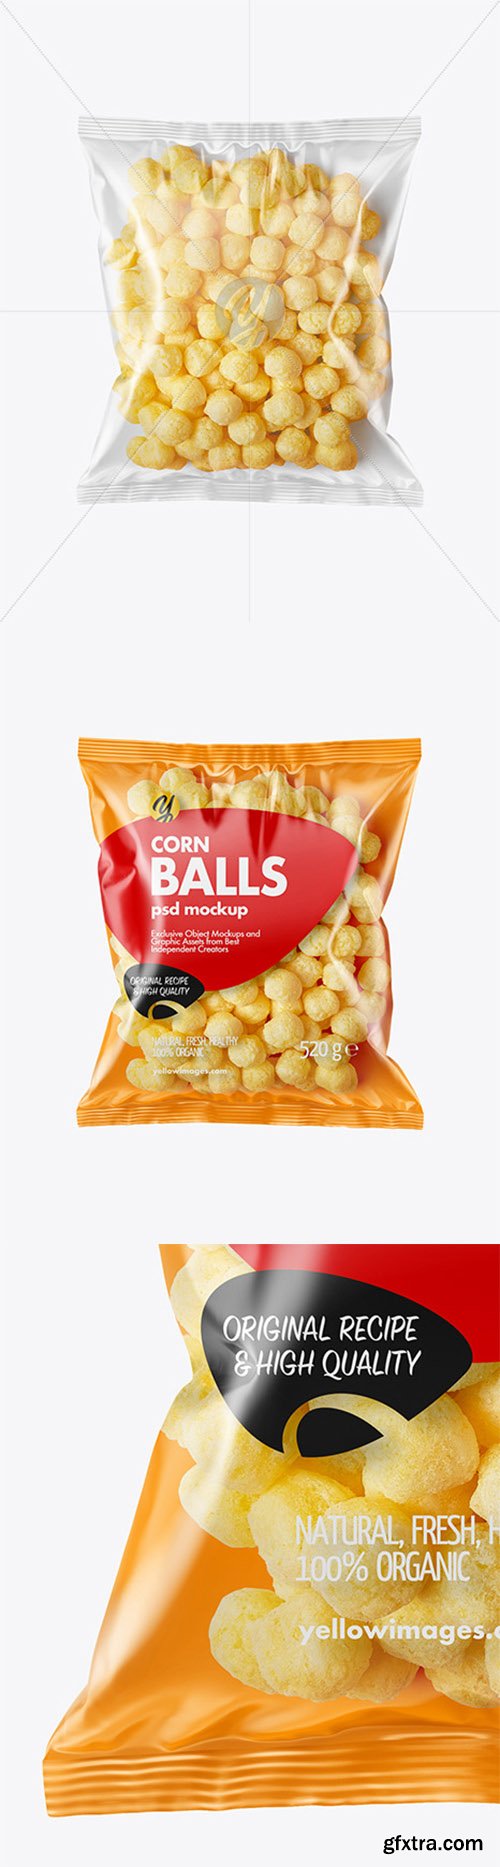 Plastic Bag With Corn Balls Mockup 79794